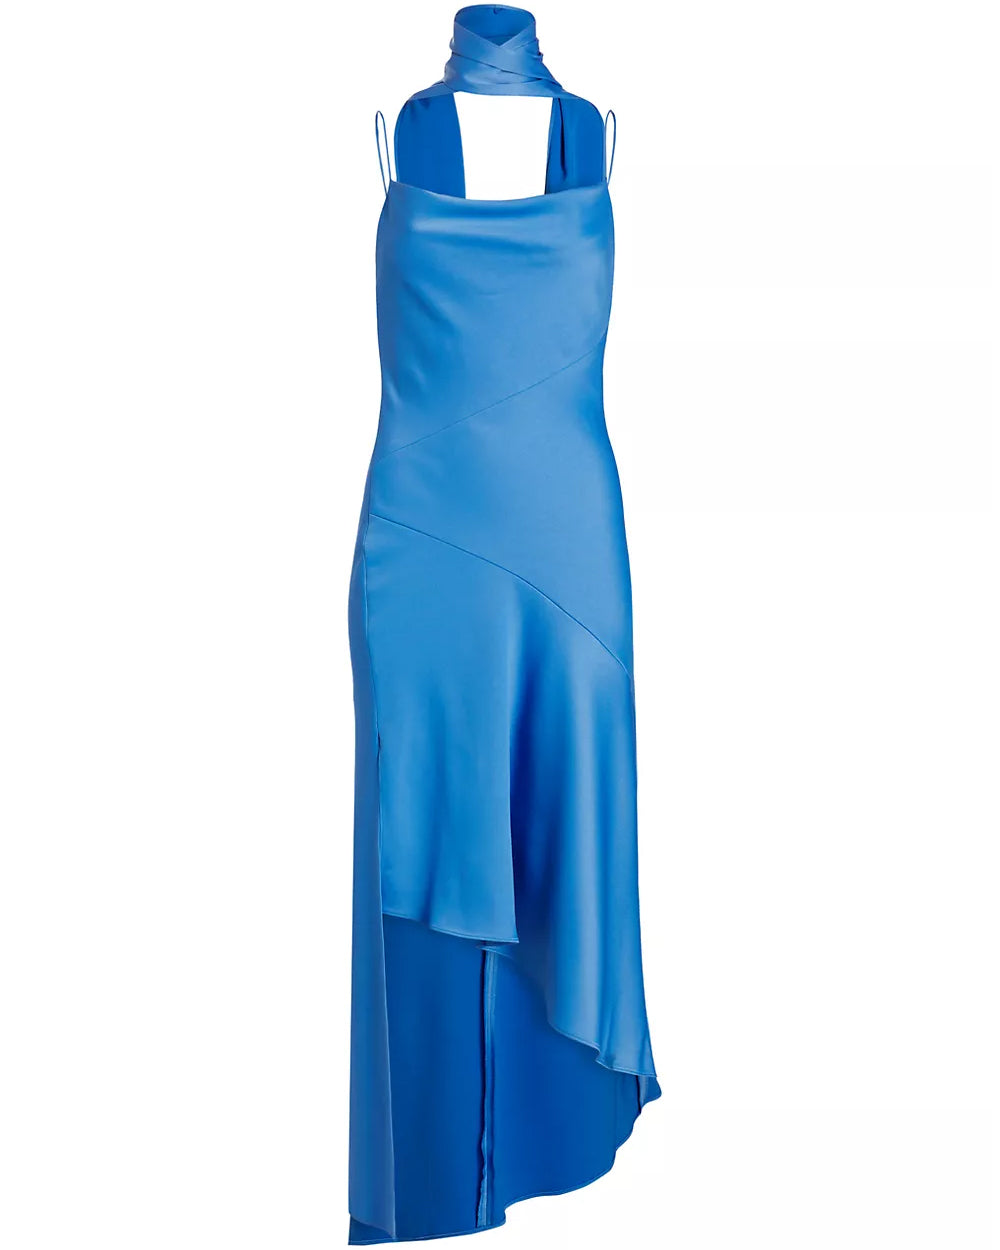 French Blue Asymmetrical Harmony Scarf Dress